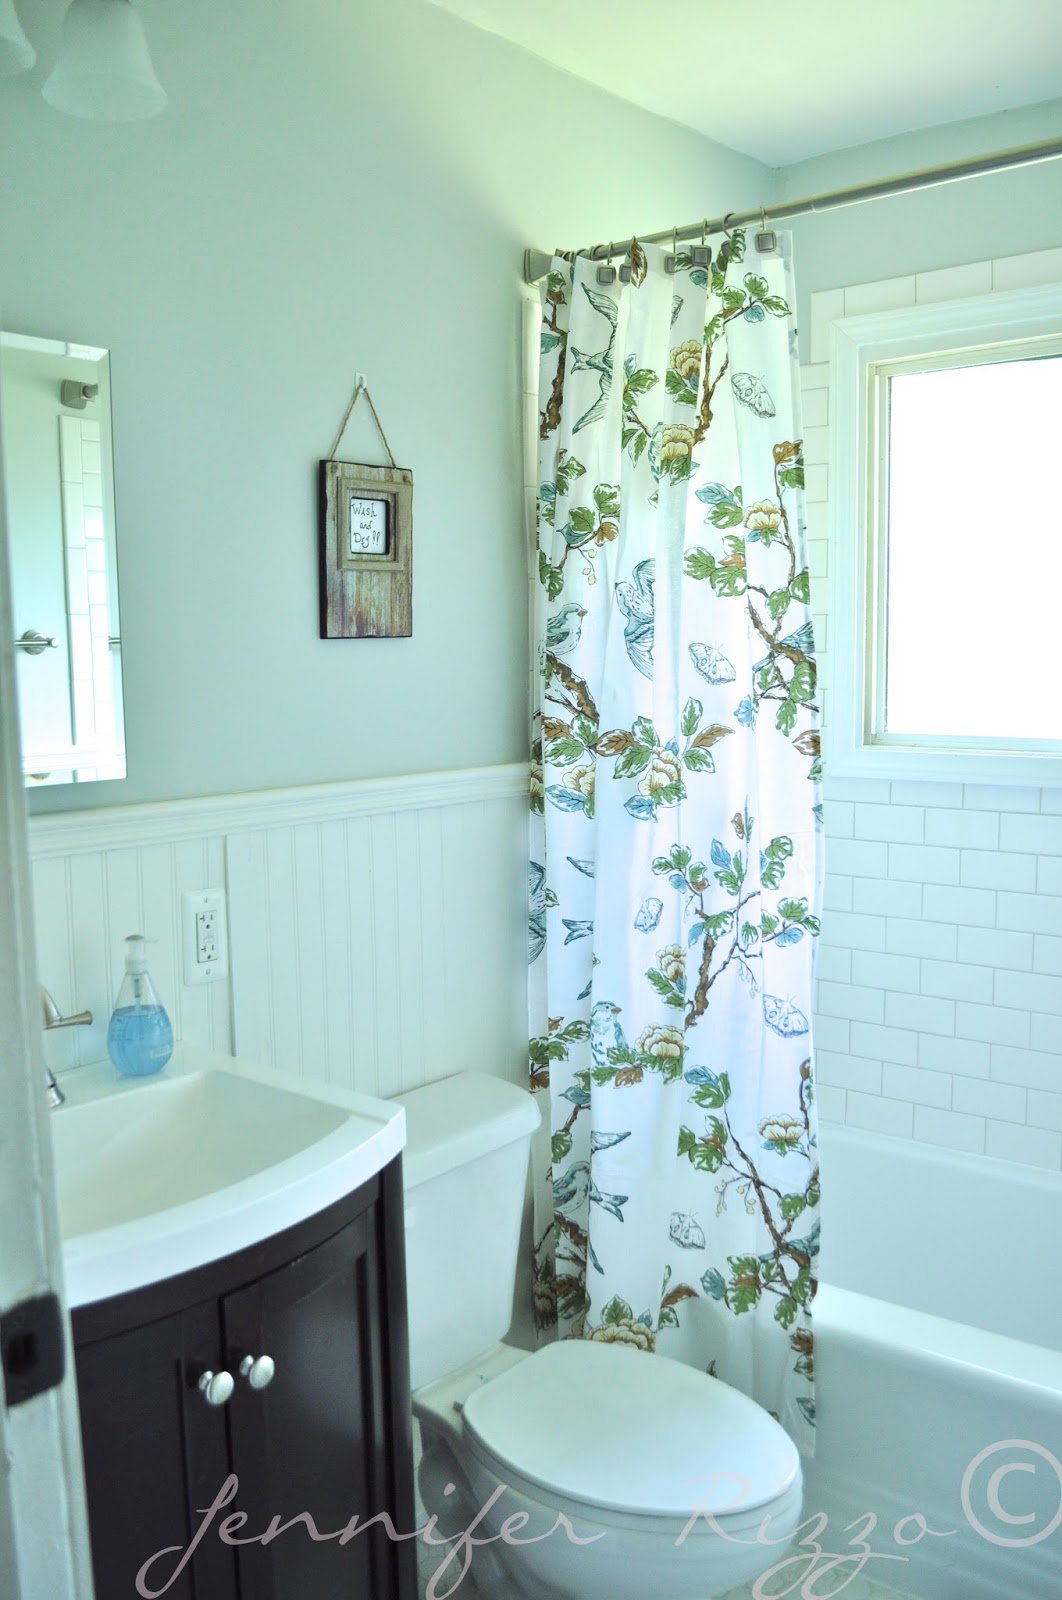 wonderful-blue-shade-vintage-bathroom-tile-patterns-classic-kitchen-design-ideas-floral-pattern-bathtub-drapes-adorable-vintage-bathroom-tile-patterns-blue-bathroom-floor-tile-bathroom-favorite-ch